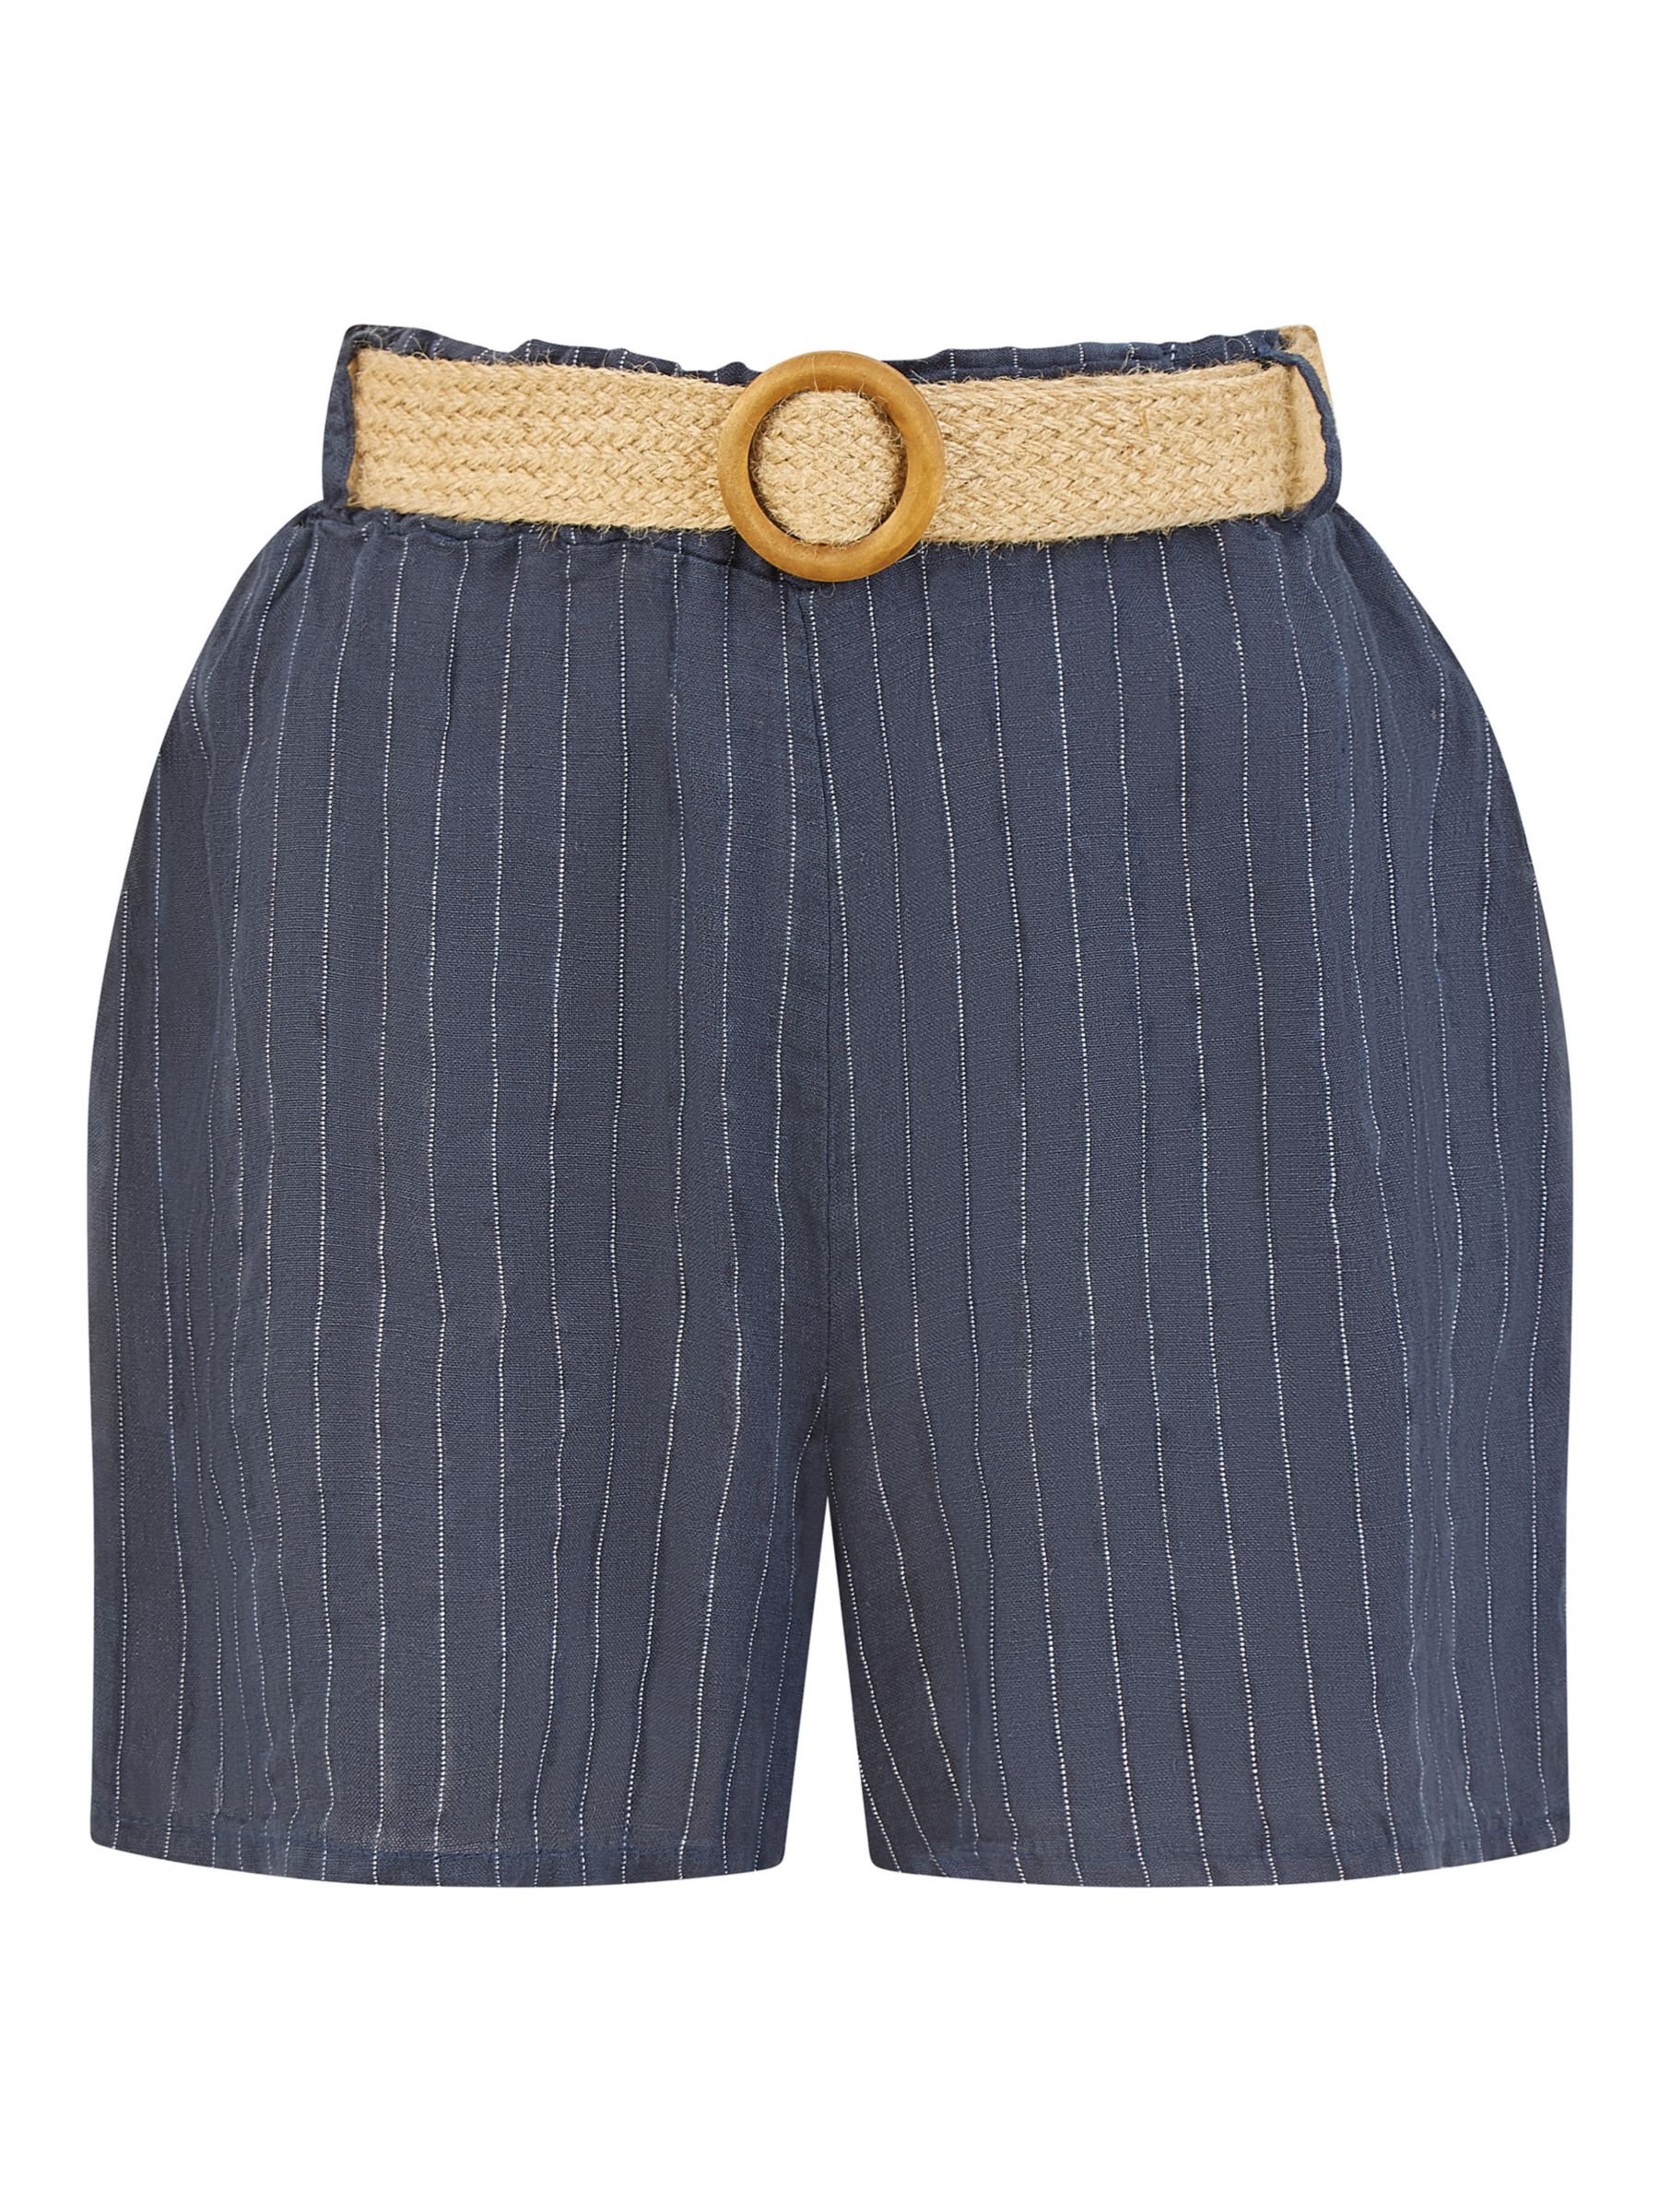 Yumi Stripe Italian Linen Shorts, Navy, S